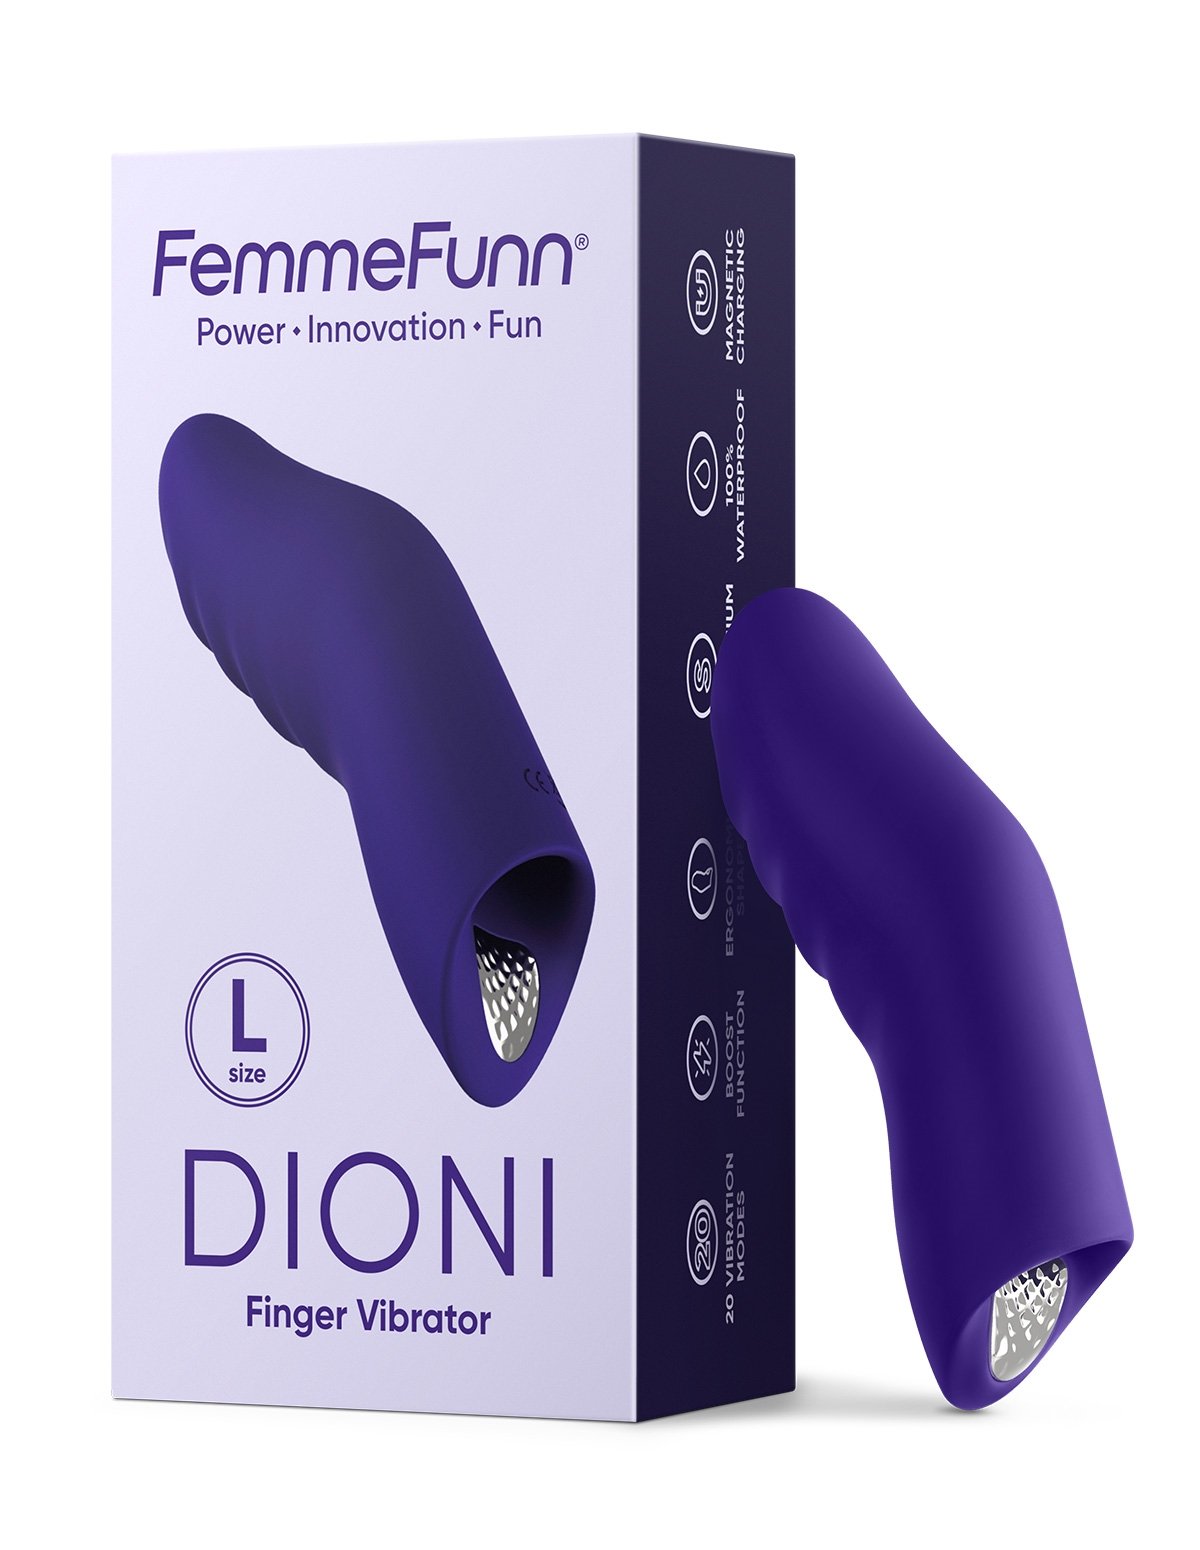 alternate image for Femme Fun Dioni Finger Vibrator - Large